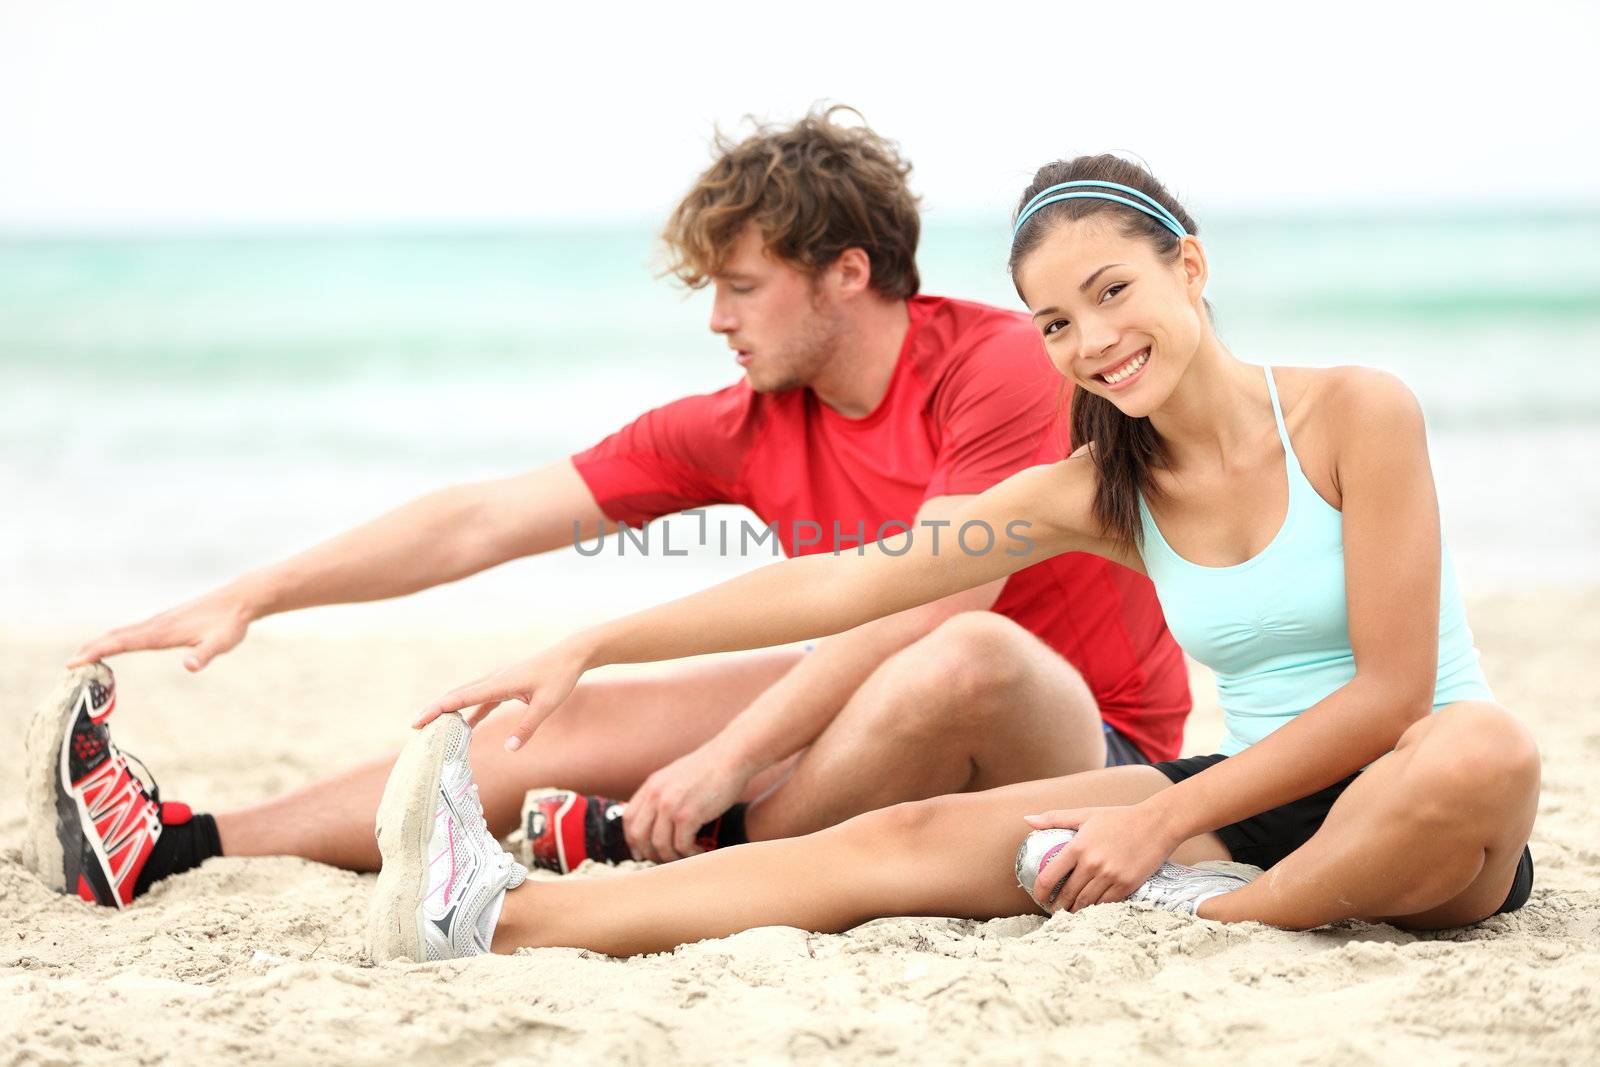 Couple training on beach by Maridav